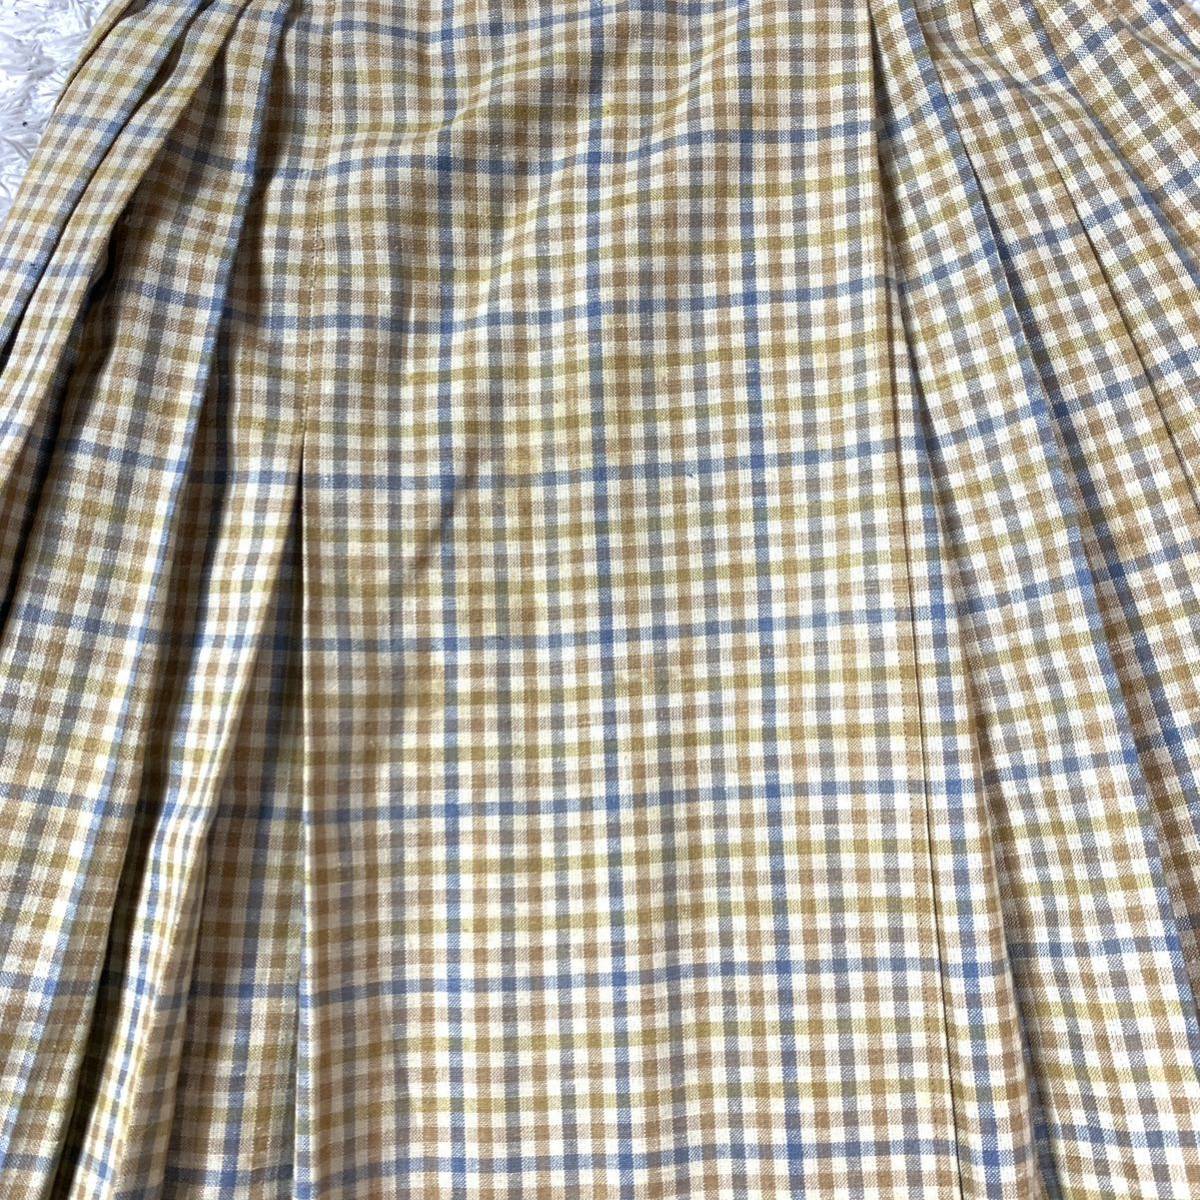  Burberry юбка в складку длинная юбка проверка flair linenYA5430